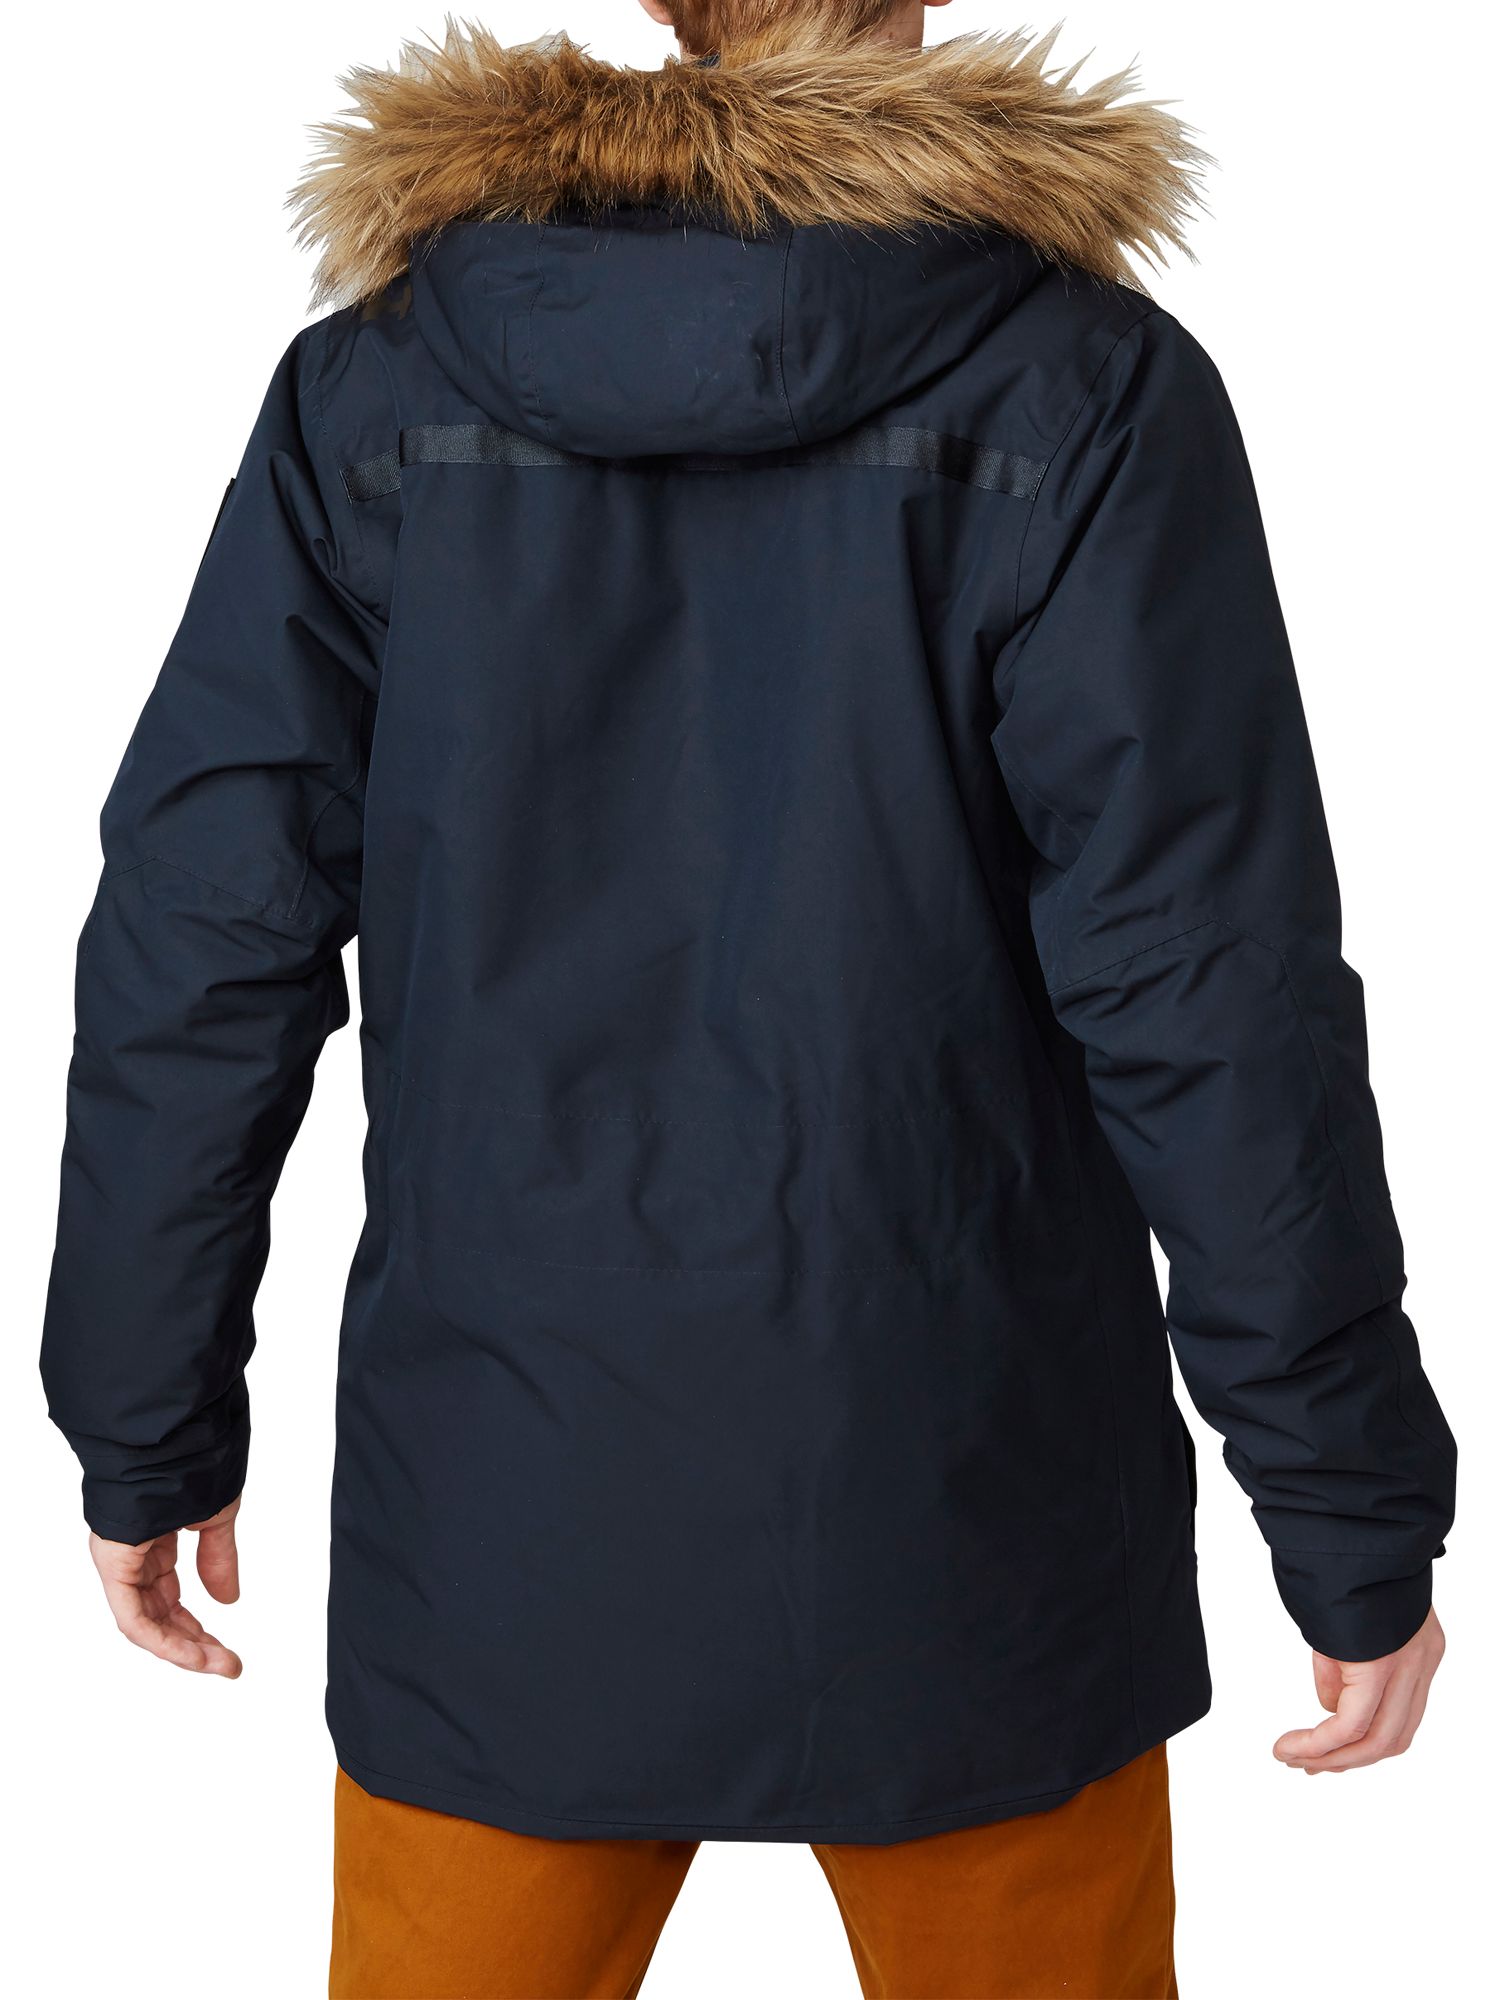 Helly Hansen Coastal 2 Waterproof Men's Parka Jacket, Navy, M